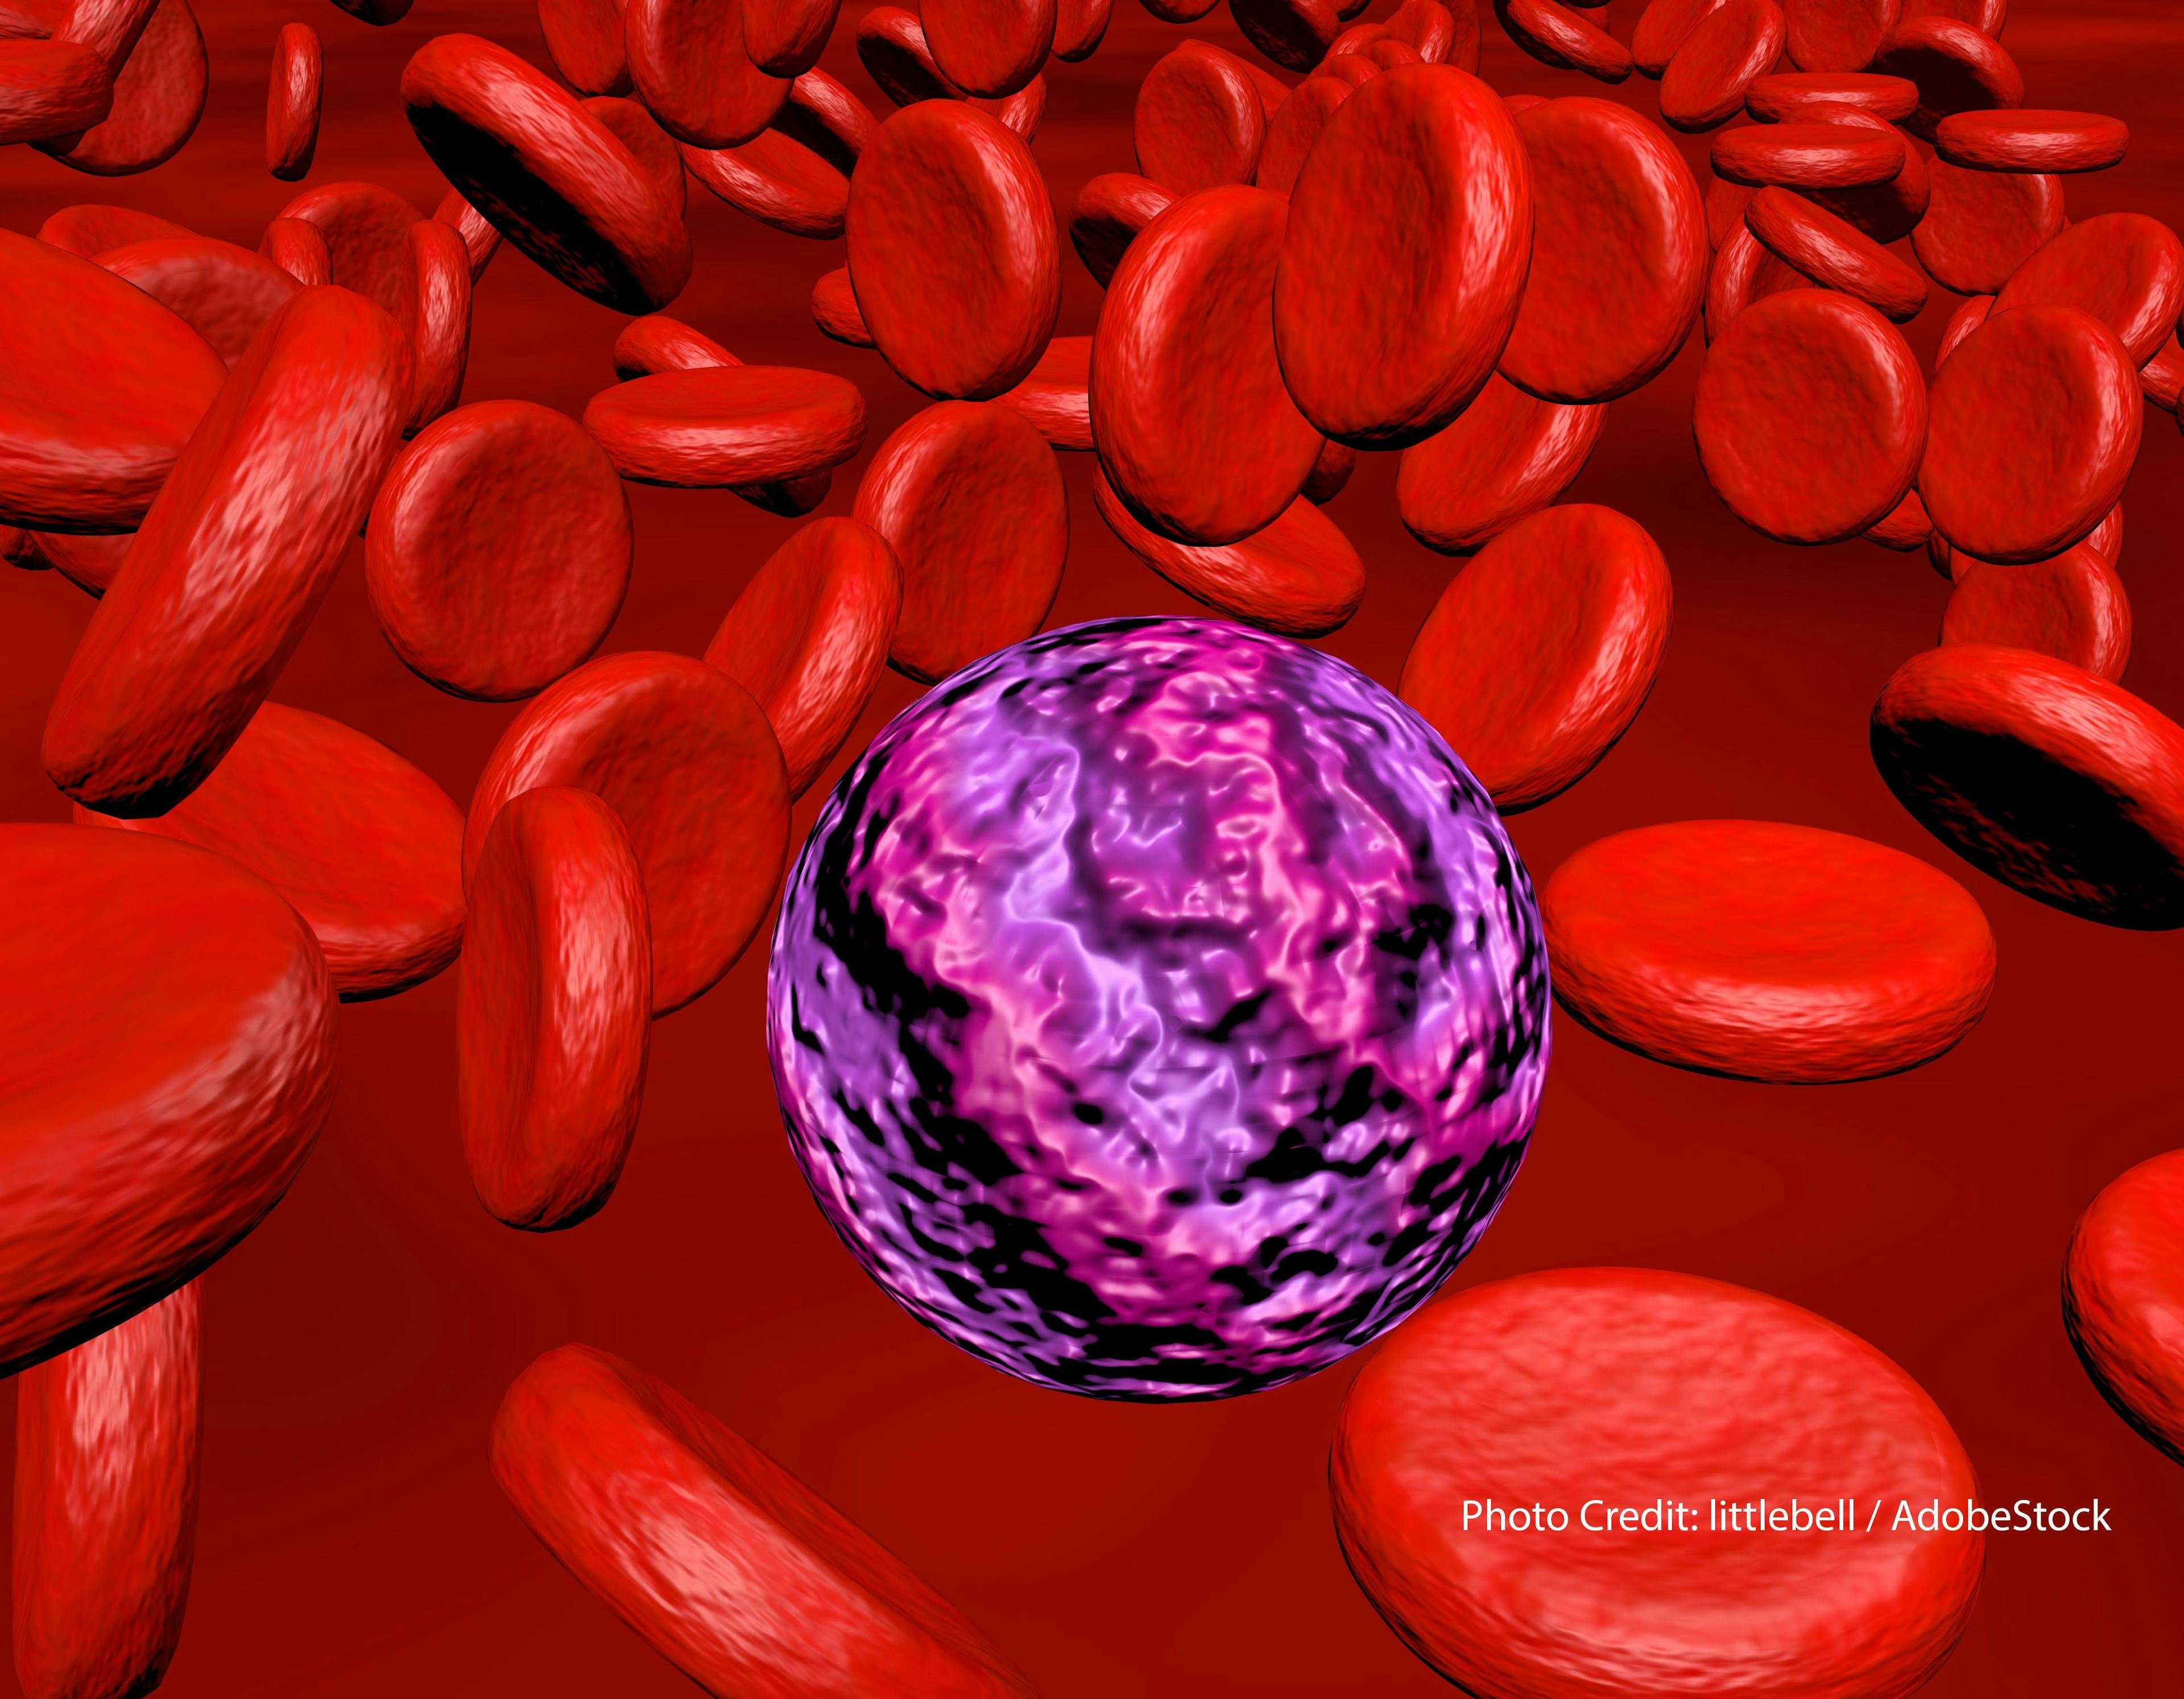 Role of the ALK Inhibitor AZD3463 in Sorafenib-Resistant Acute Myeloid Leukemia